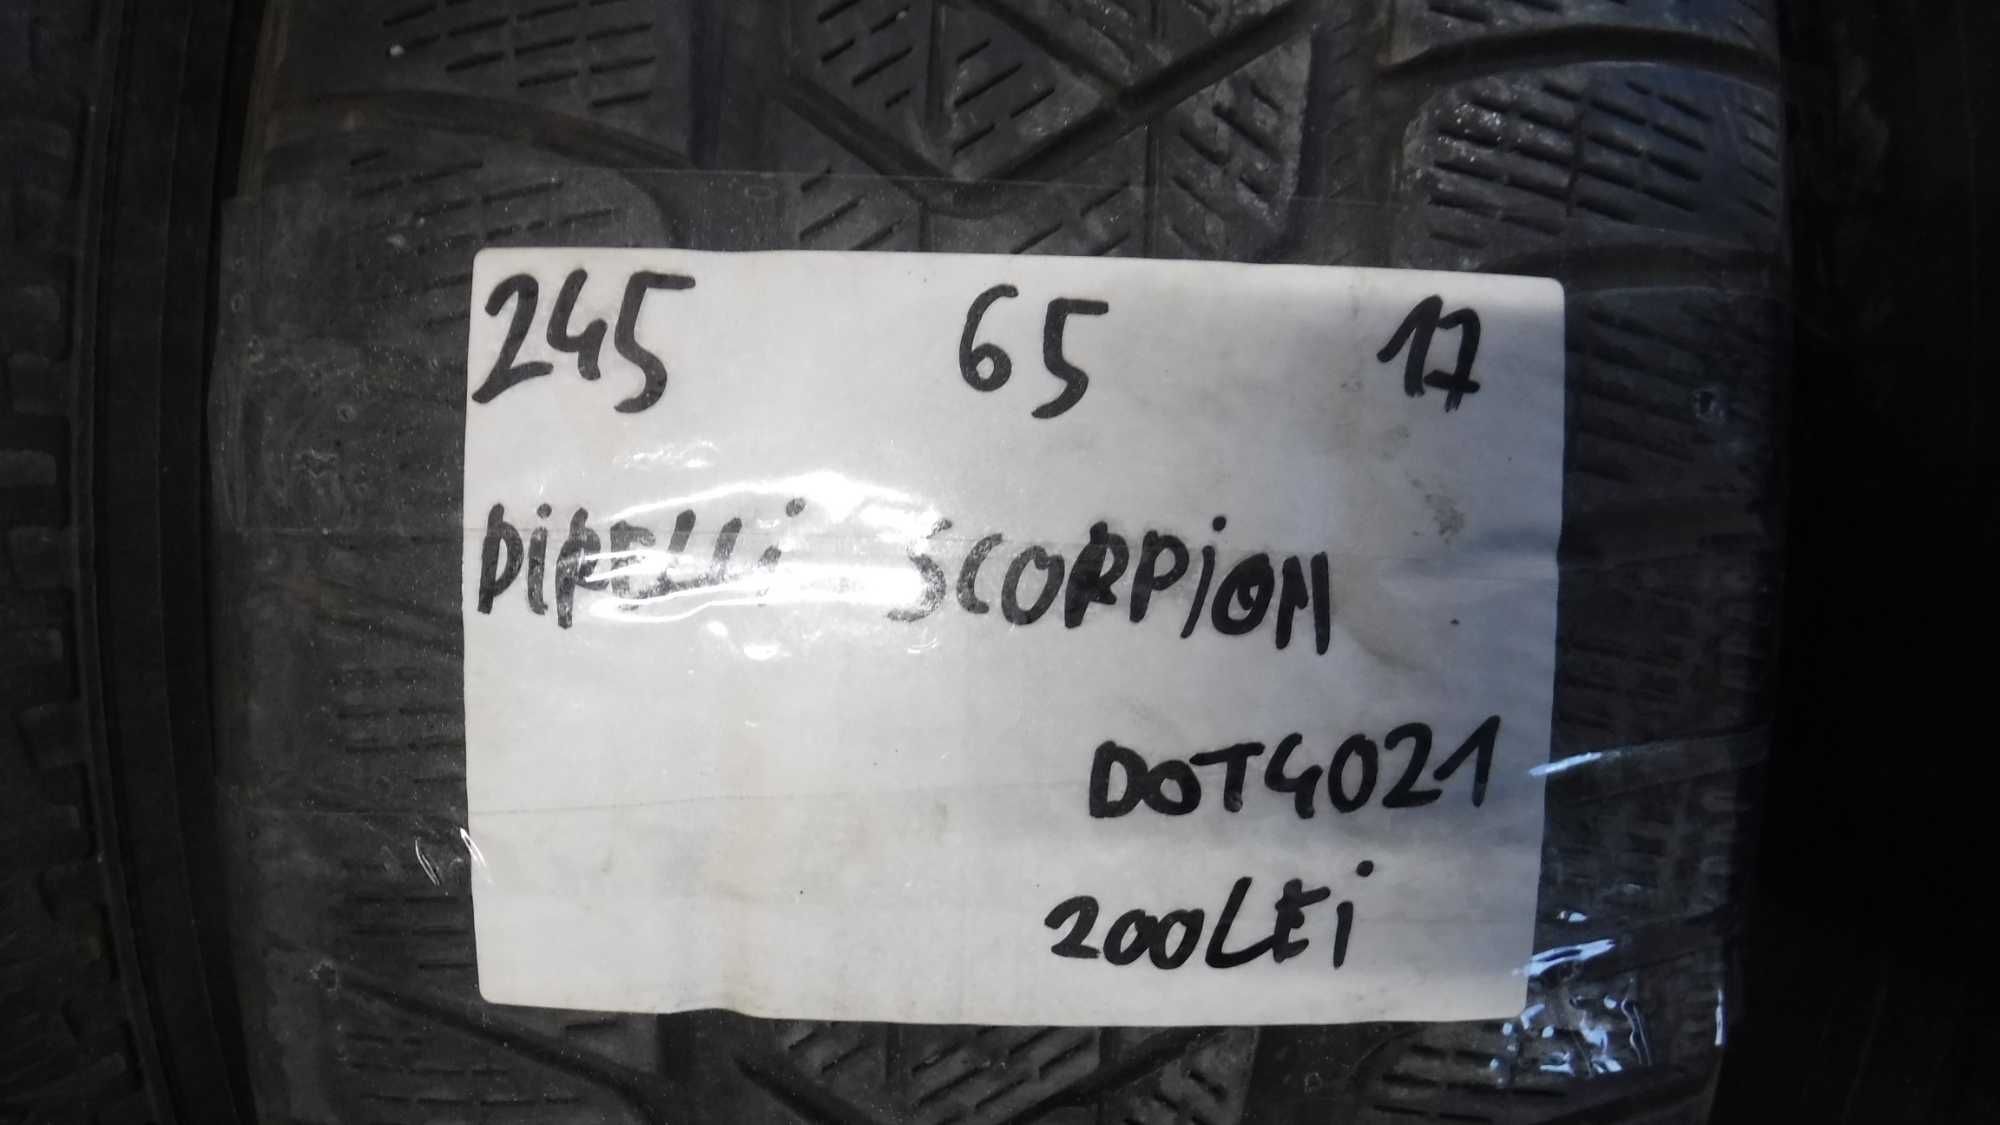 245 65 17 Pirelli Scorpion DOT 4021